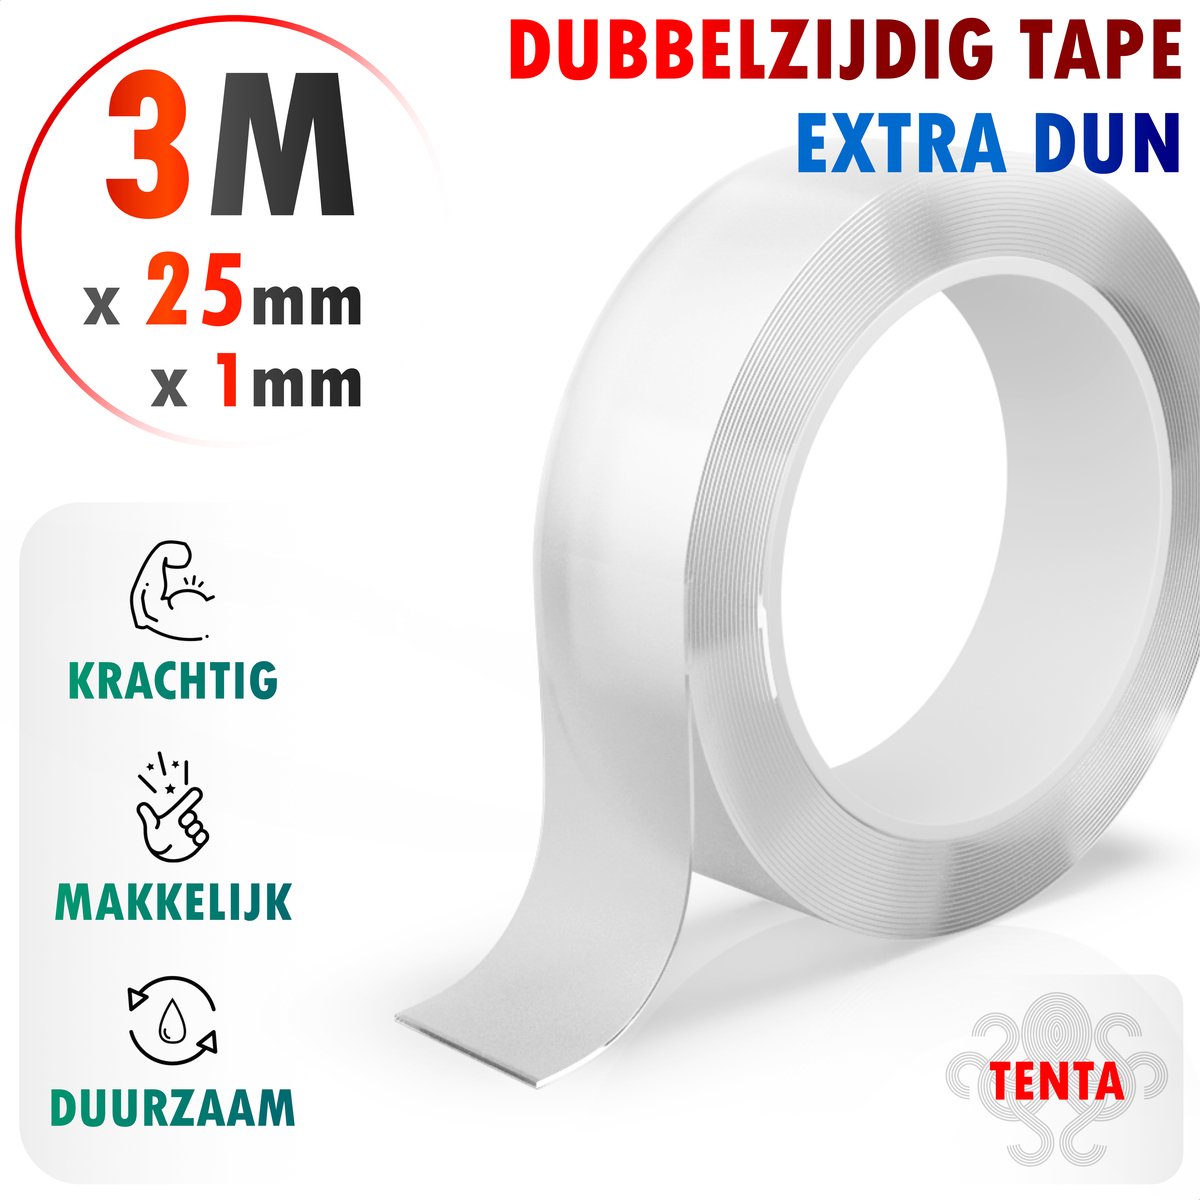 TENTA® Dubbelzijdig Tape Extra Dun - 3m x 25mm x 1mm - TENTA®